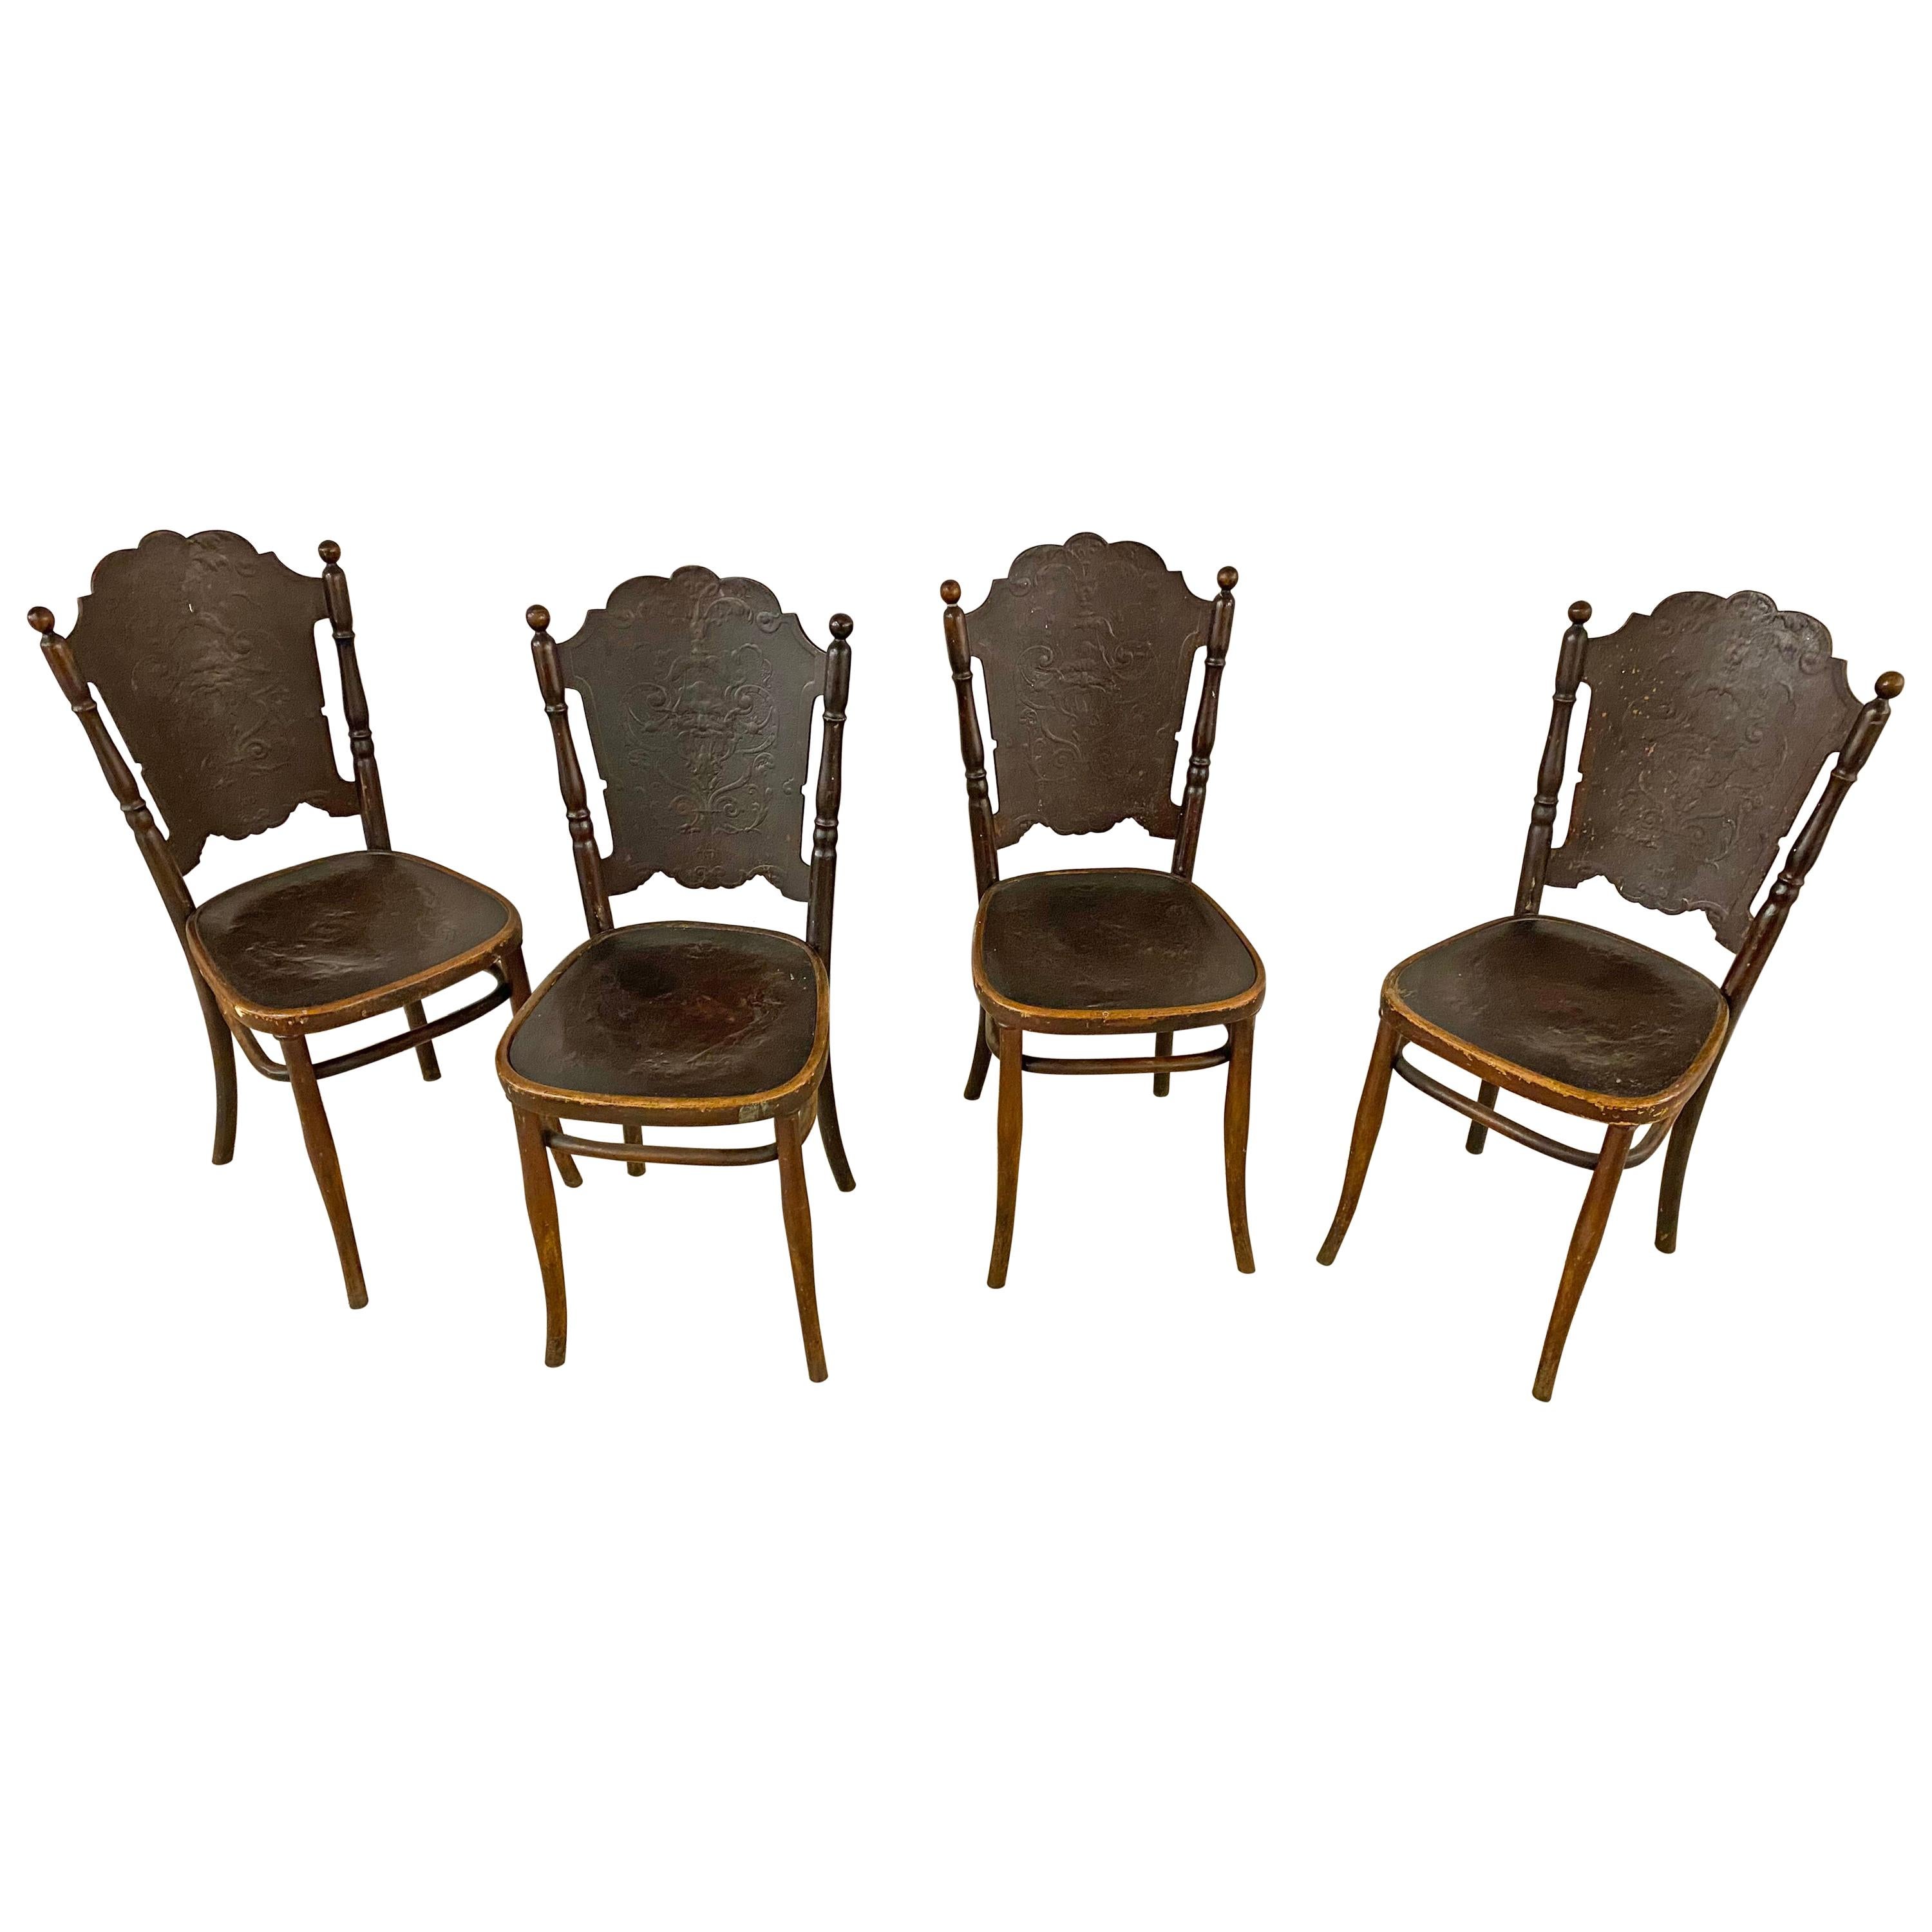 4 Antique N ° 67 Chairs from Jacob & Josef Kohn, circa 1900